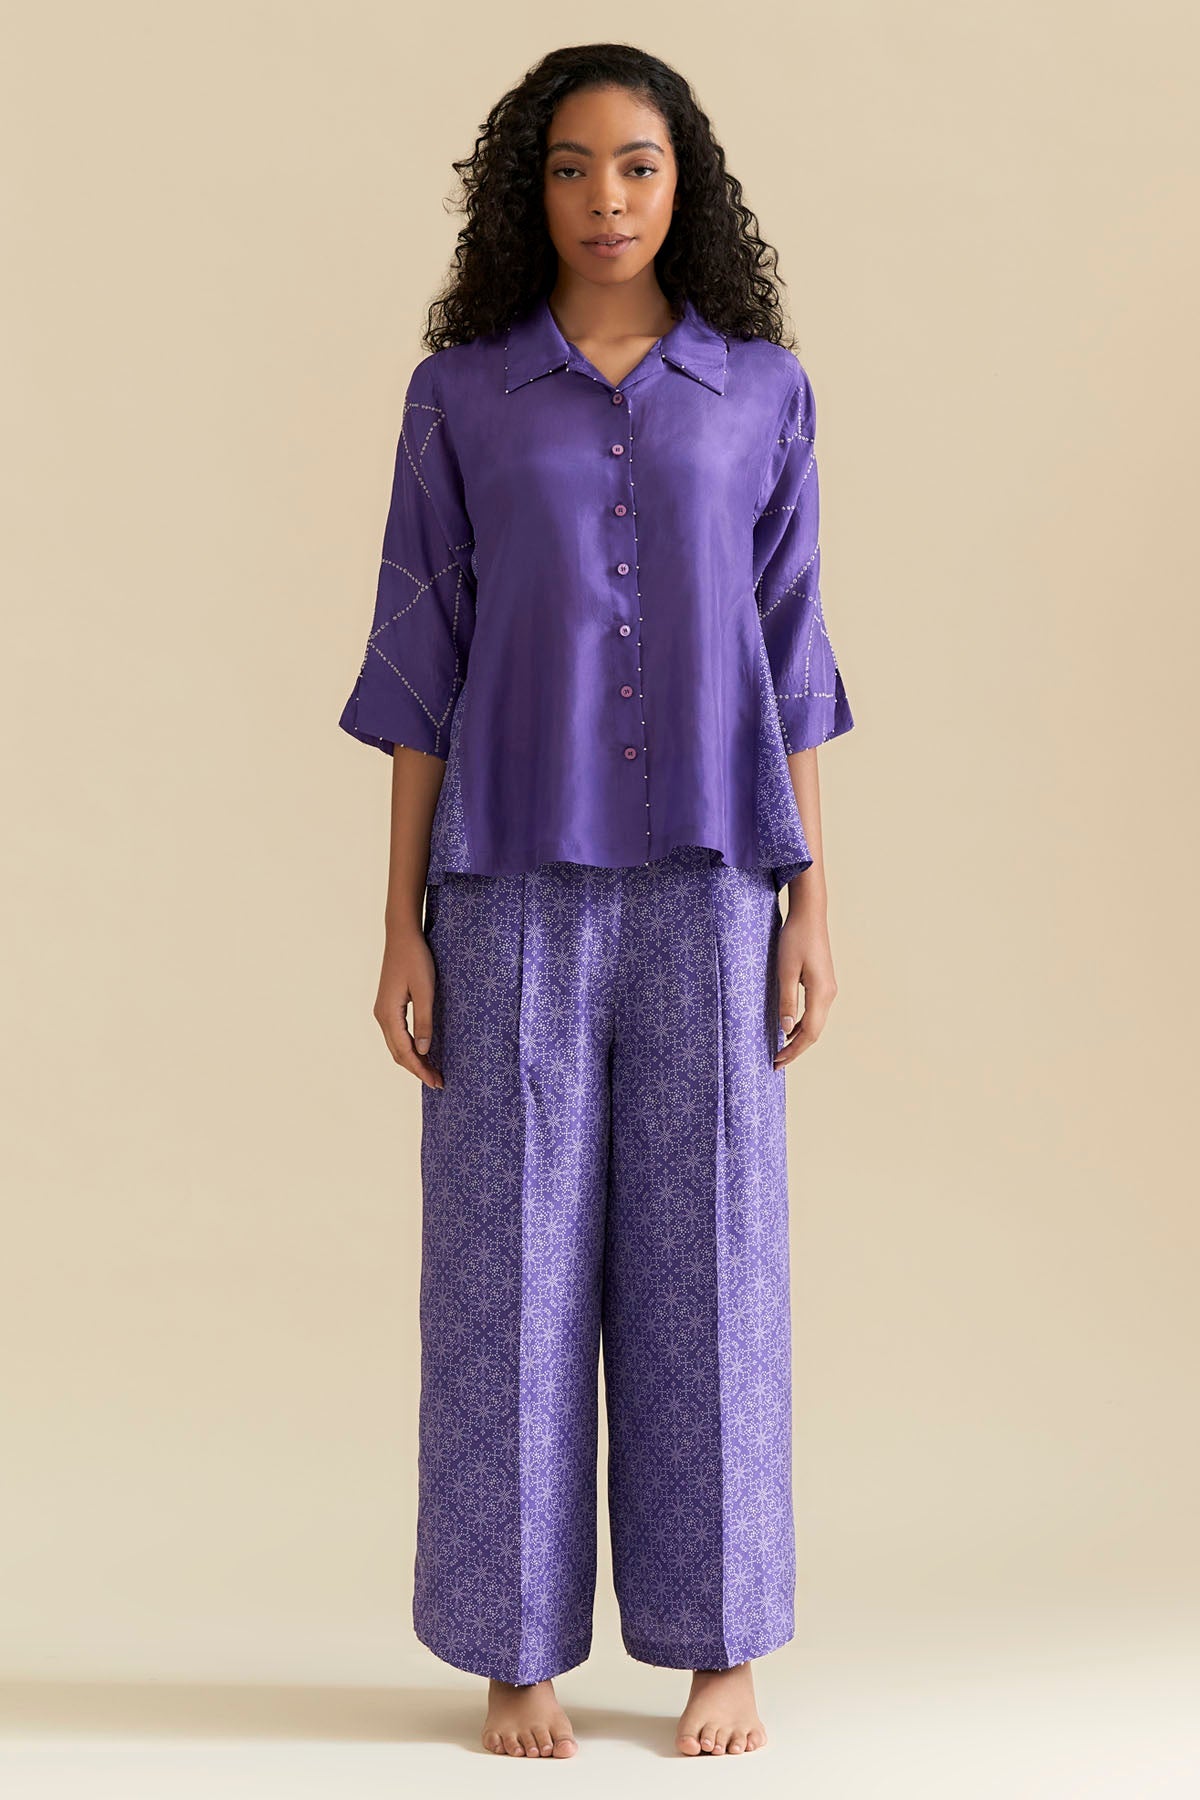 Srota by Srishti Aggarwal Purple Embroidered Panel Shirt for women online at ScrollnShops